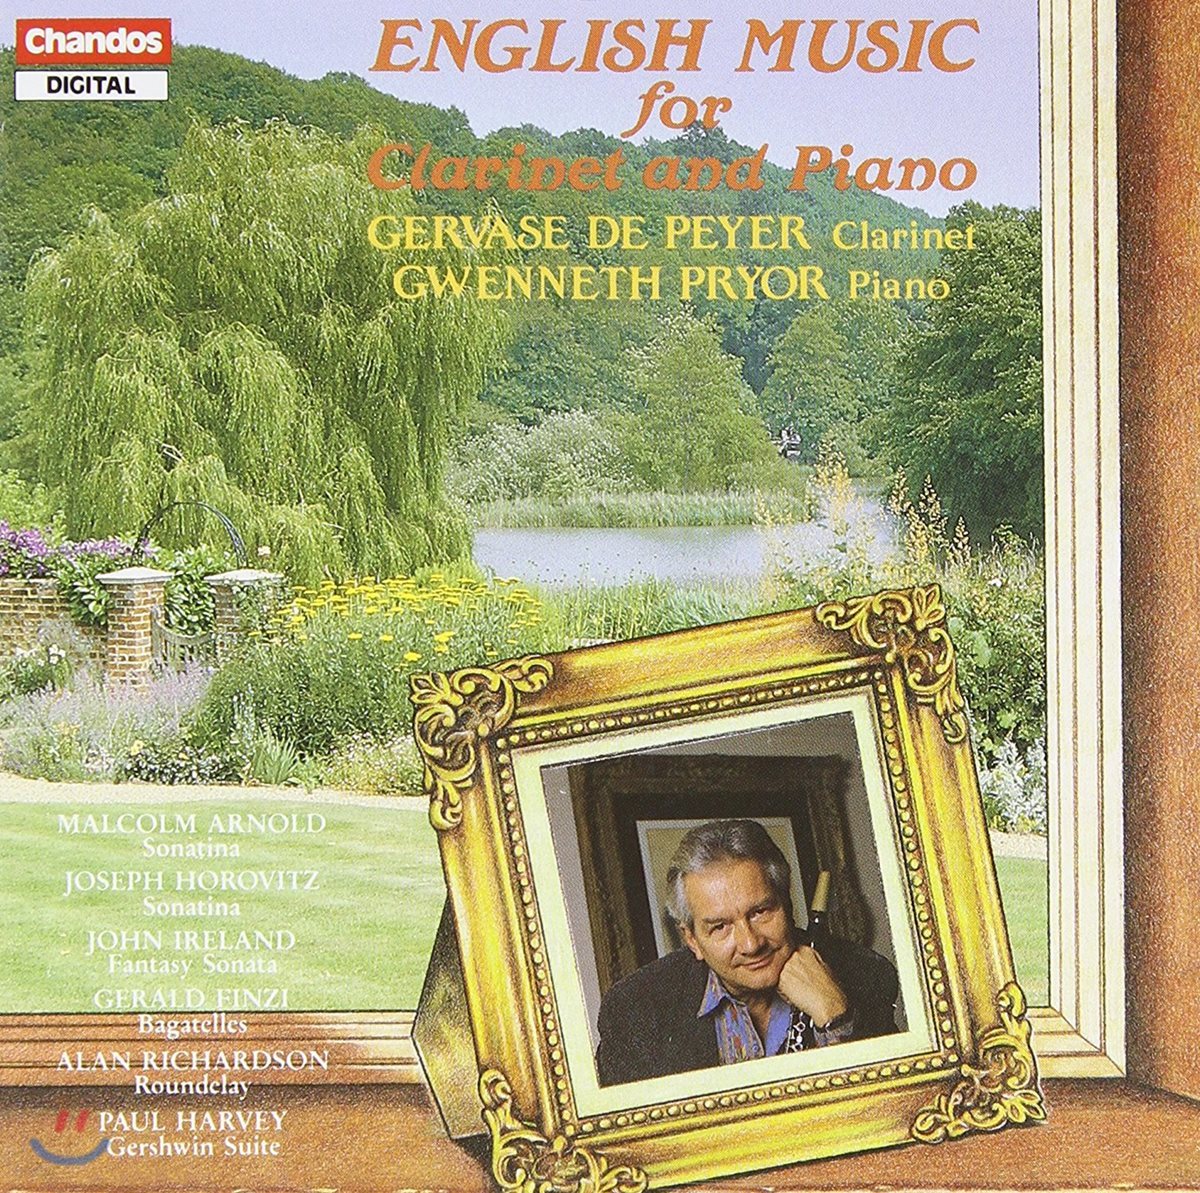 Gervase de Peyer 클라리넷과 피아노를 위한 영국 음악 - 핀츠 / 호로비츠 / 존 아일랜드 / 말콤 아놀드 (Enghish Music For Clarinet And Piano - Finzi / Horovitz / John Ireland / Malcolm Arnold)